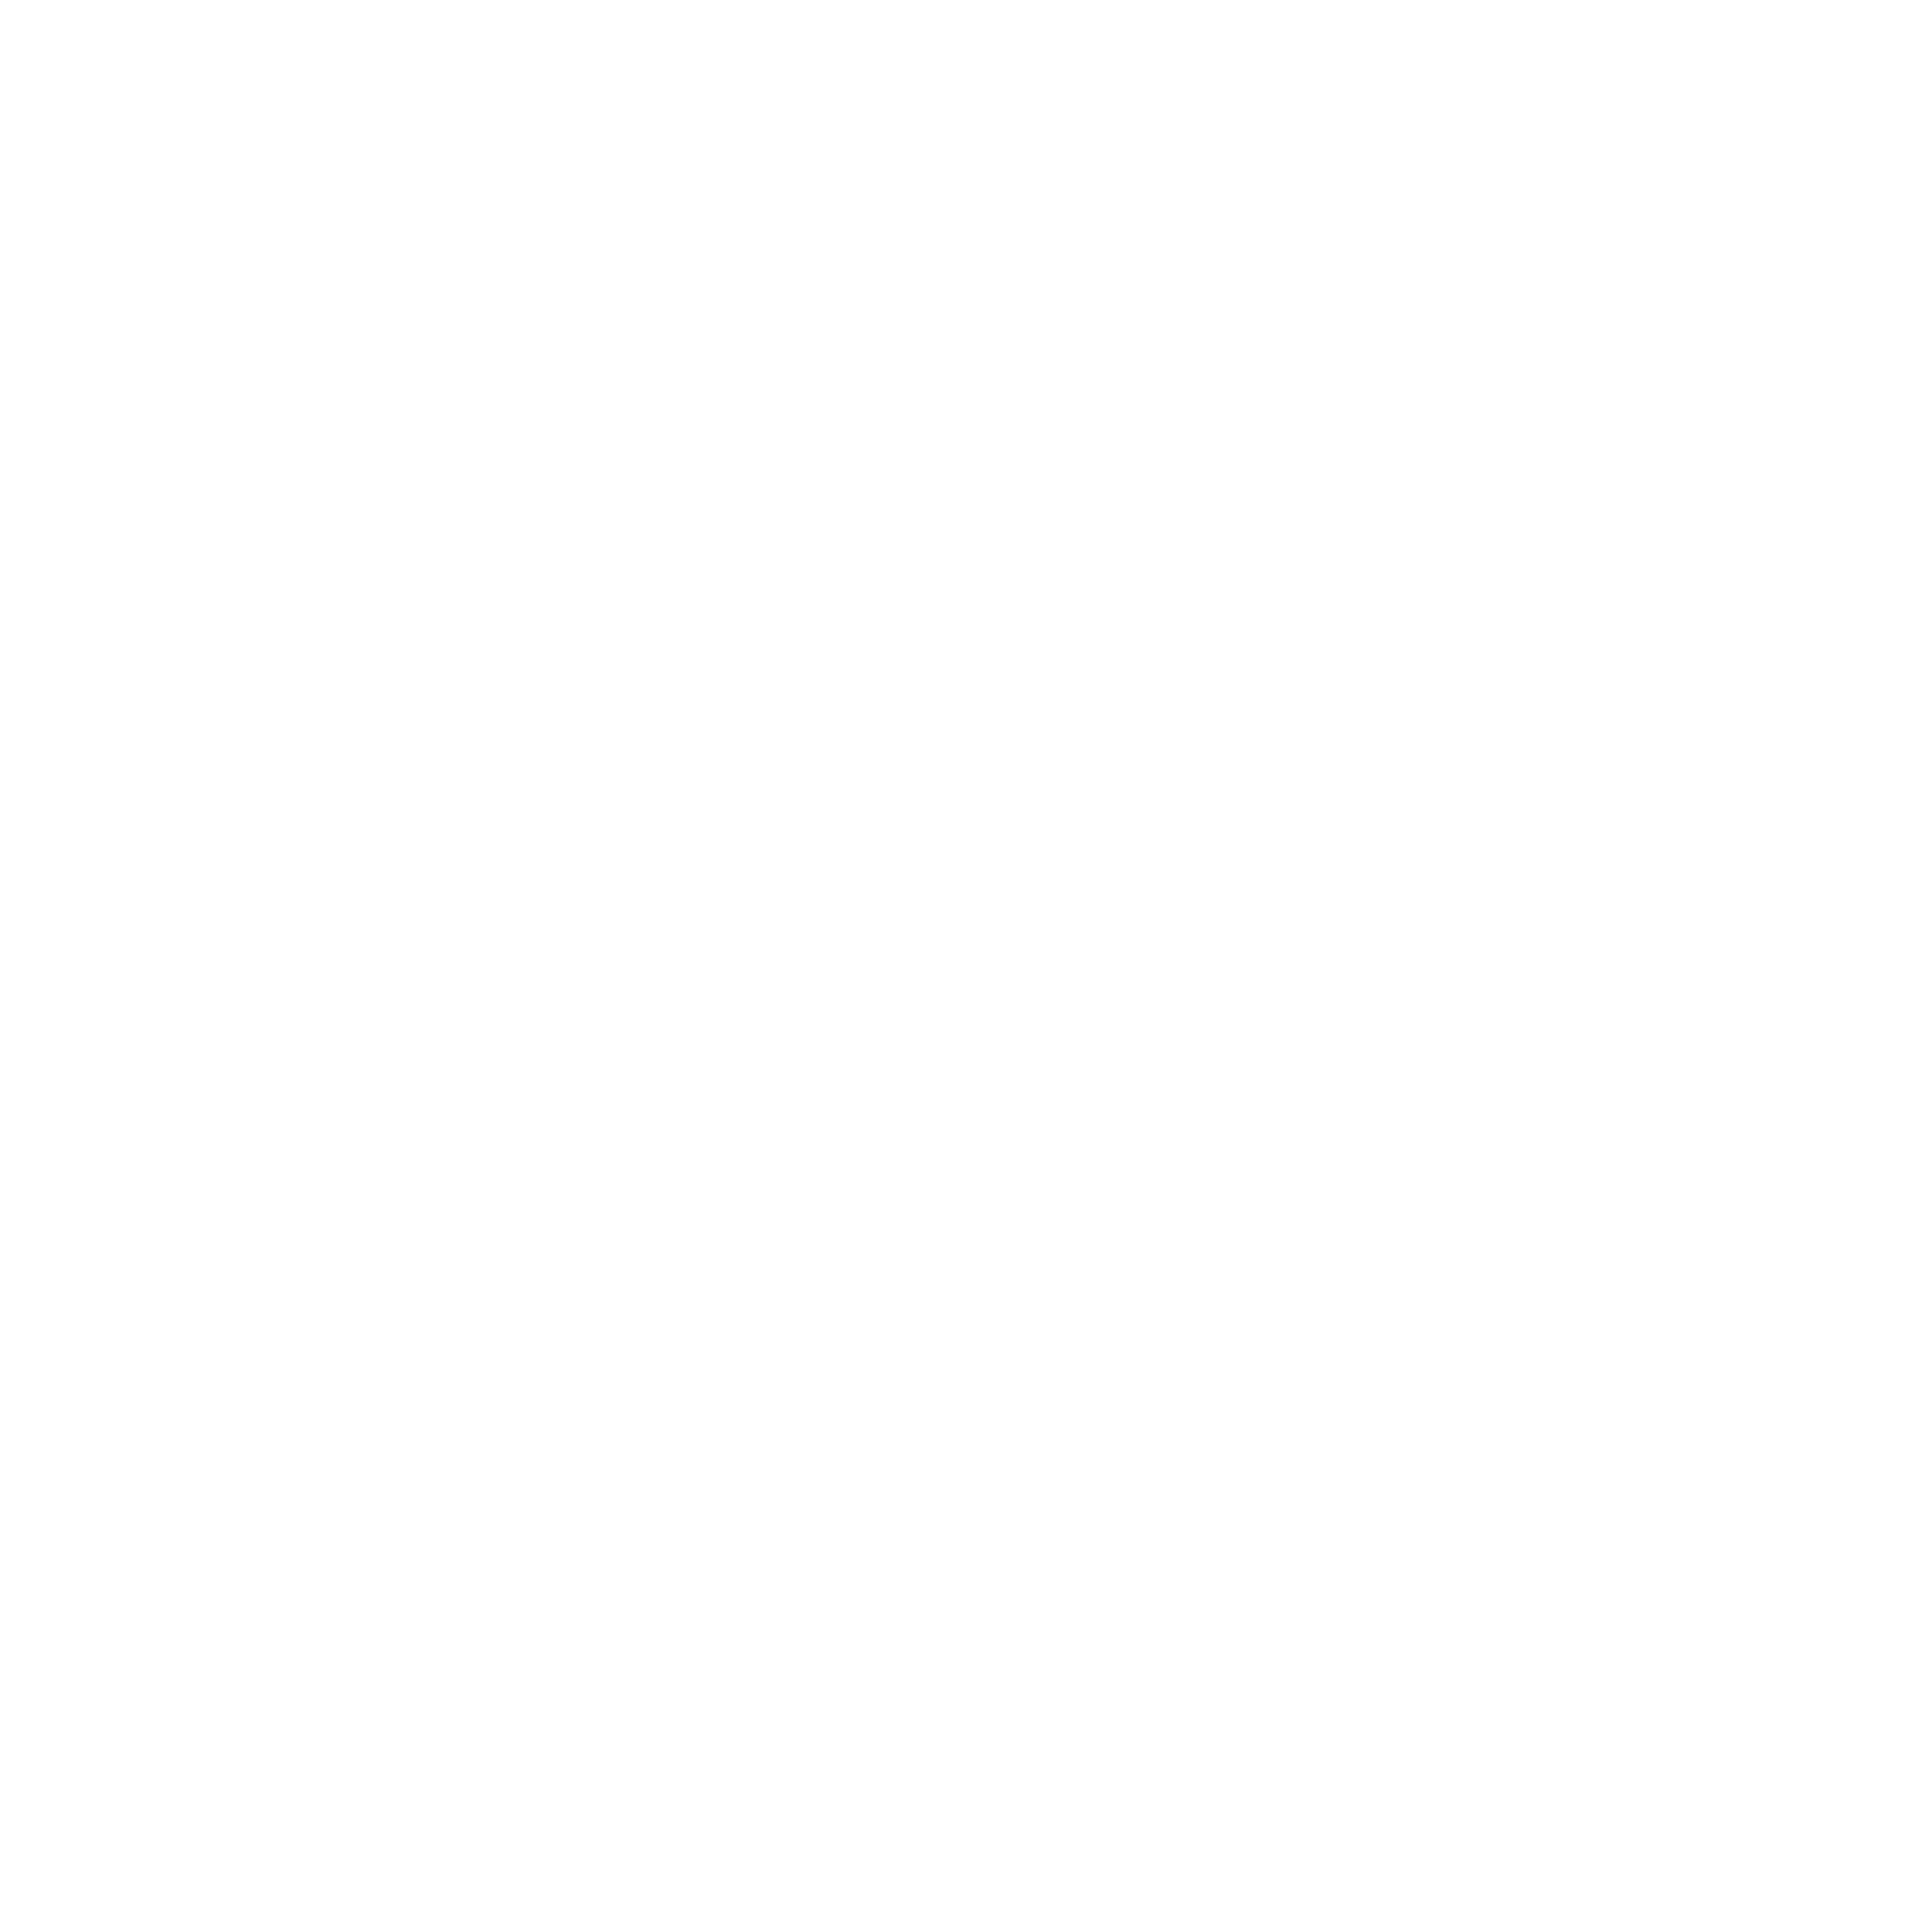 Roberto Privitera